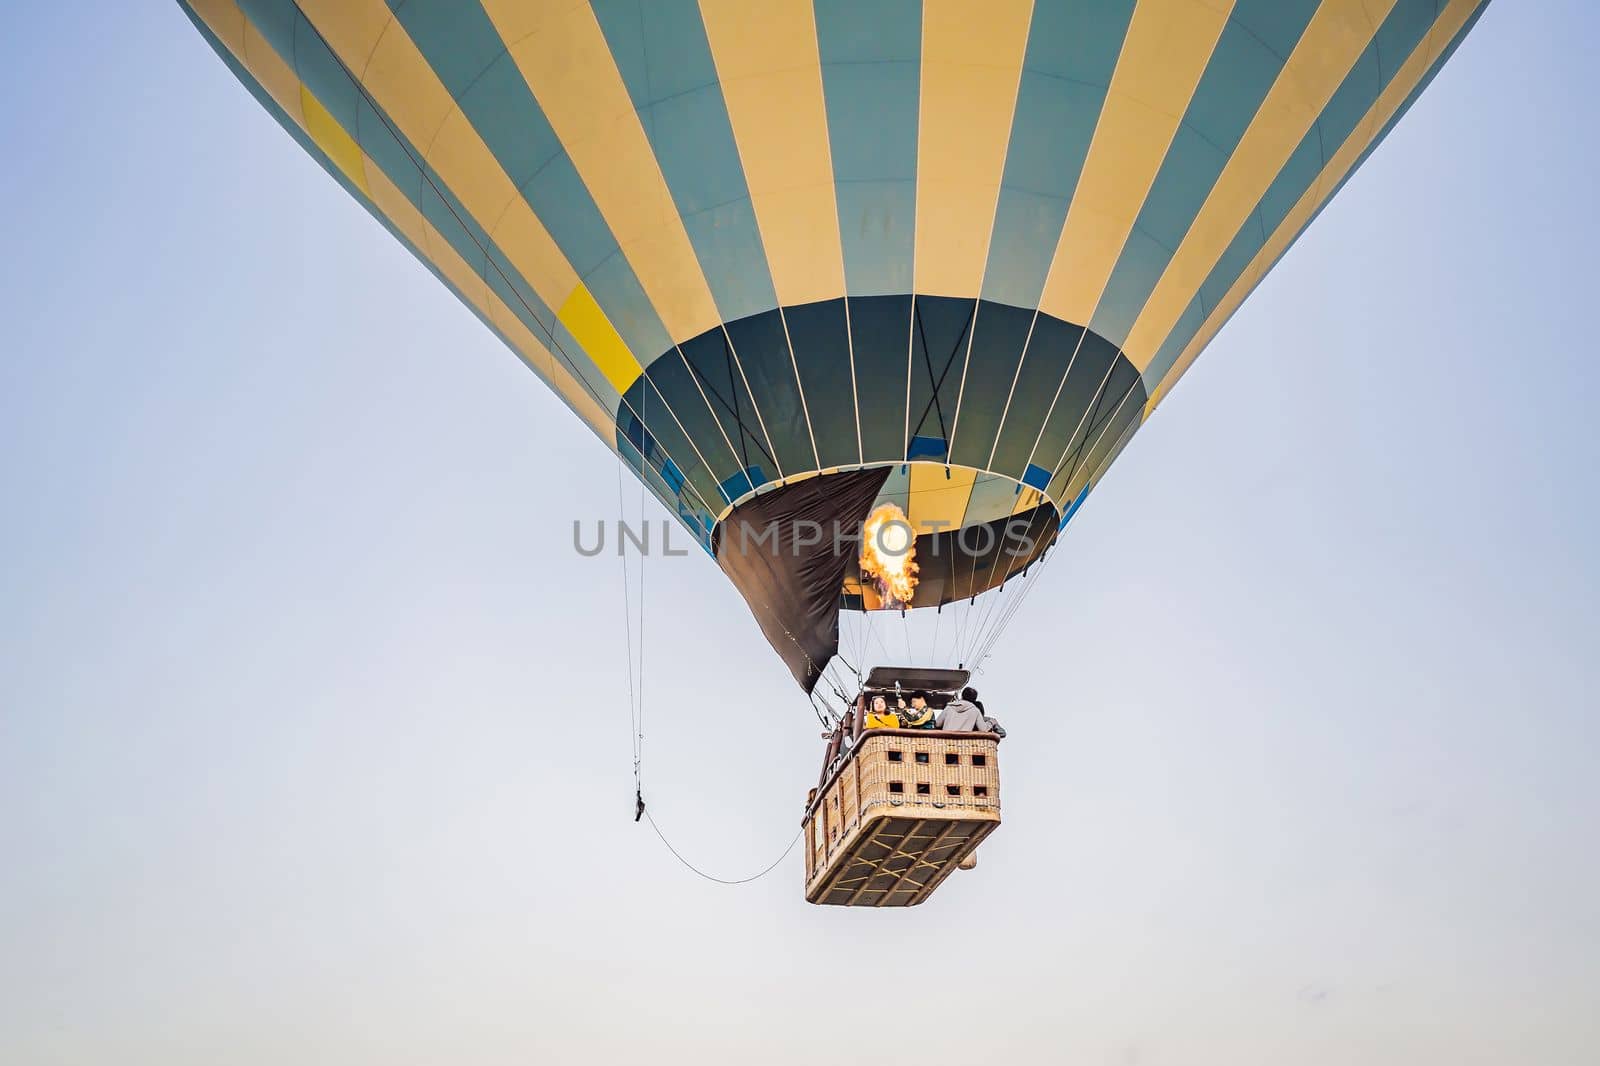 Beautiful hot air balloons over blue sky by galitskaya